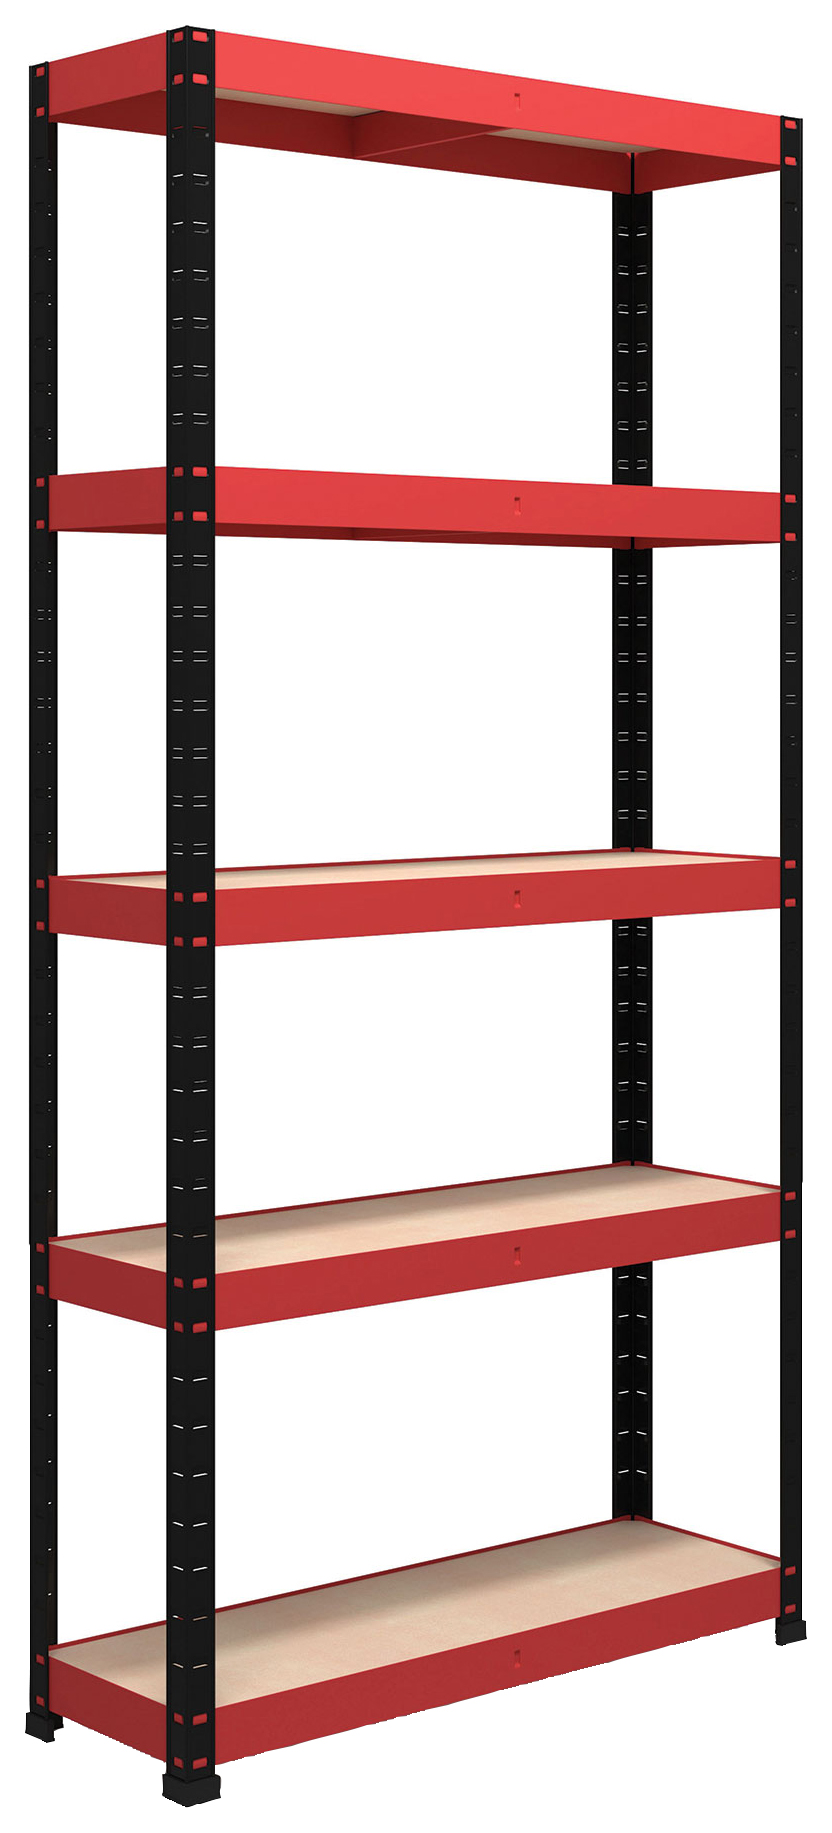 Rb Boss Shelf Kit 5 Wood Shelves - 1800 x 900 x 300mm 250kg Udl